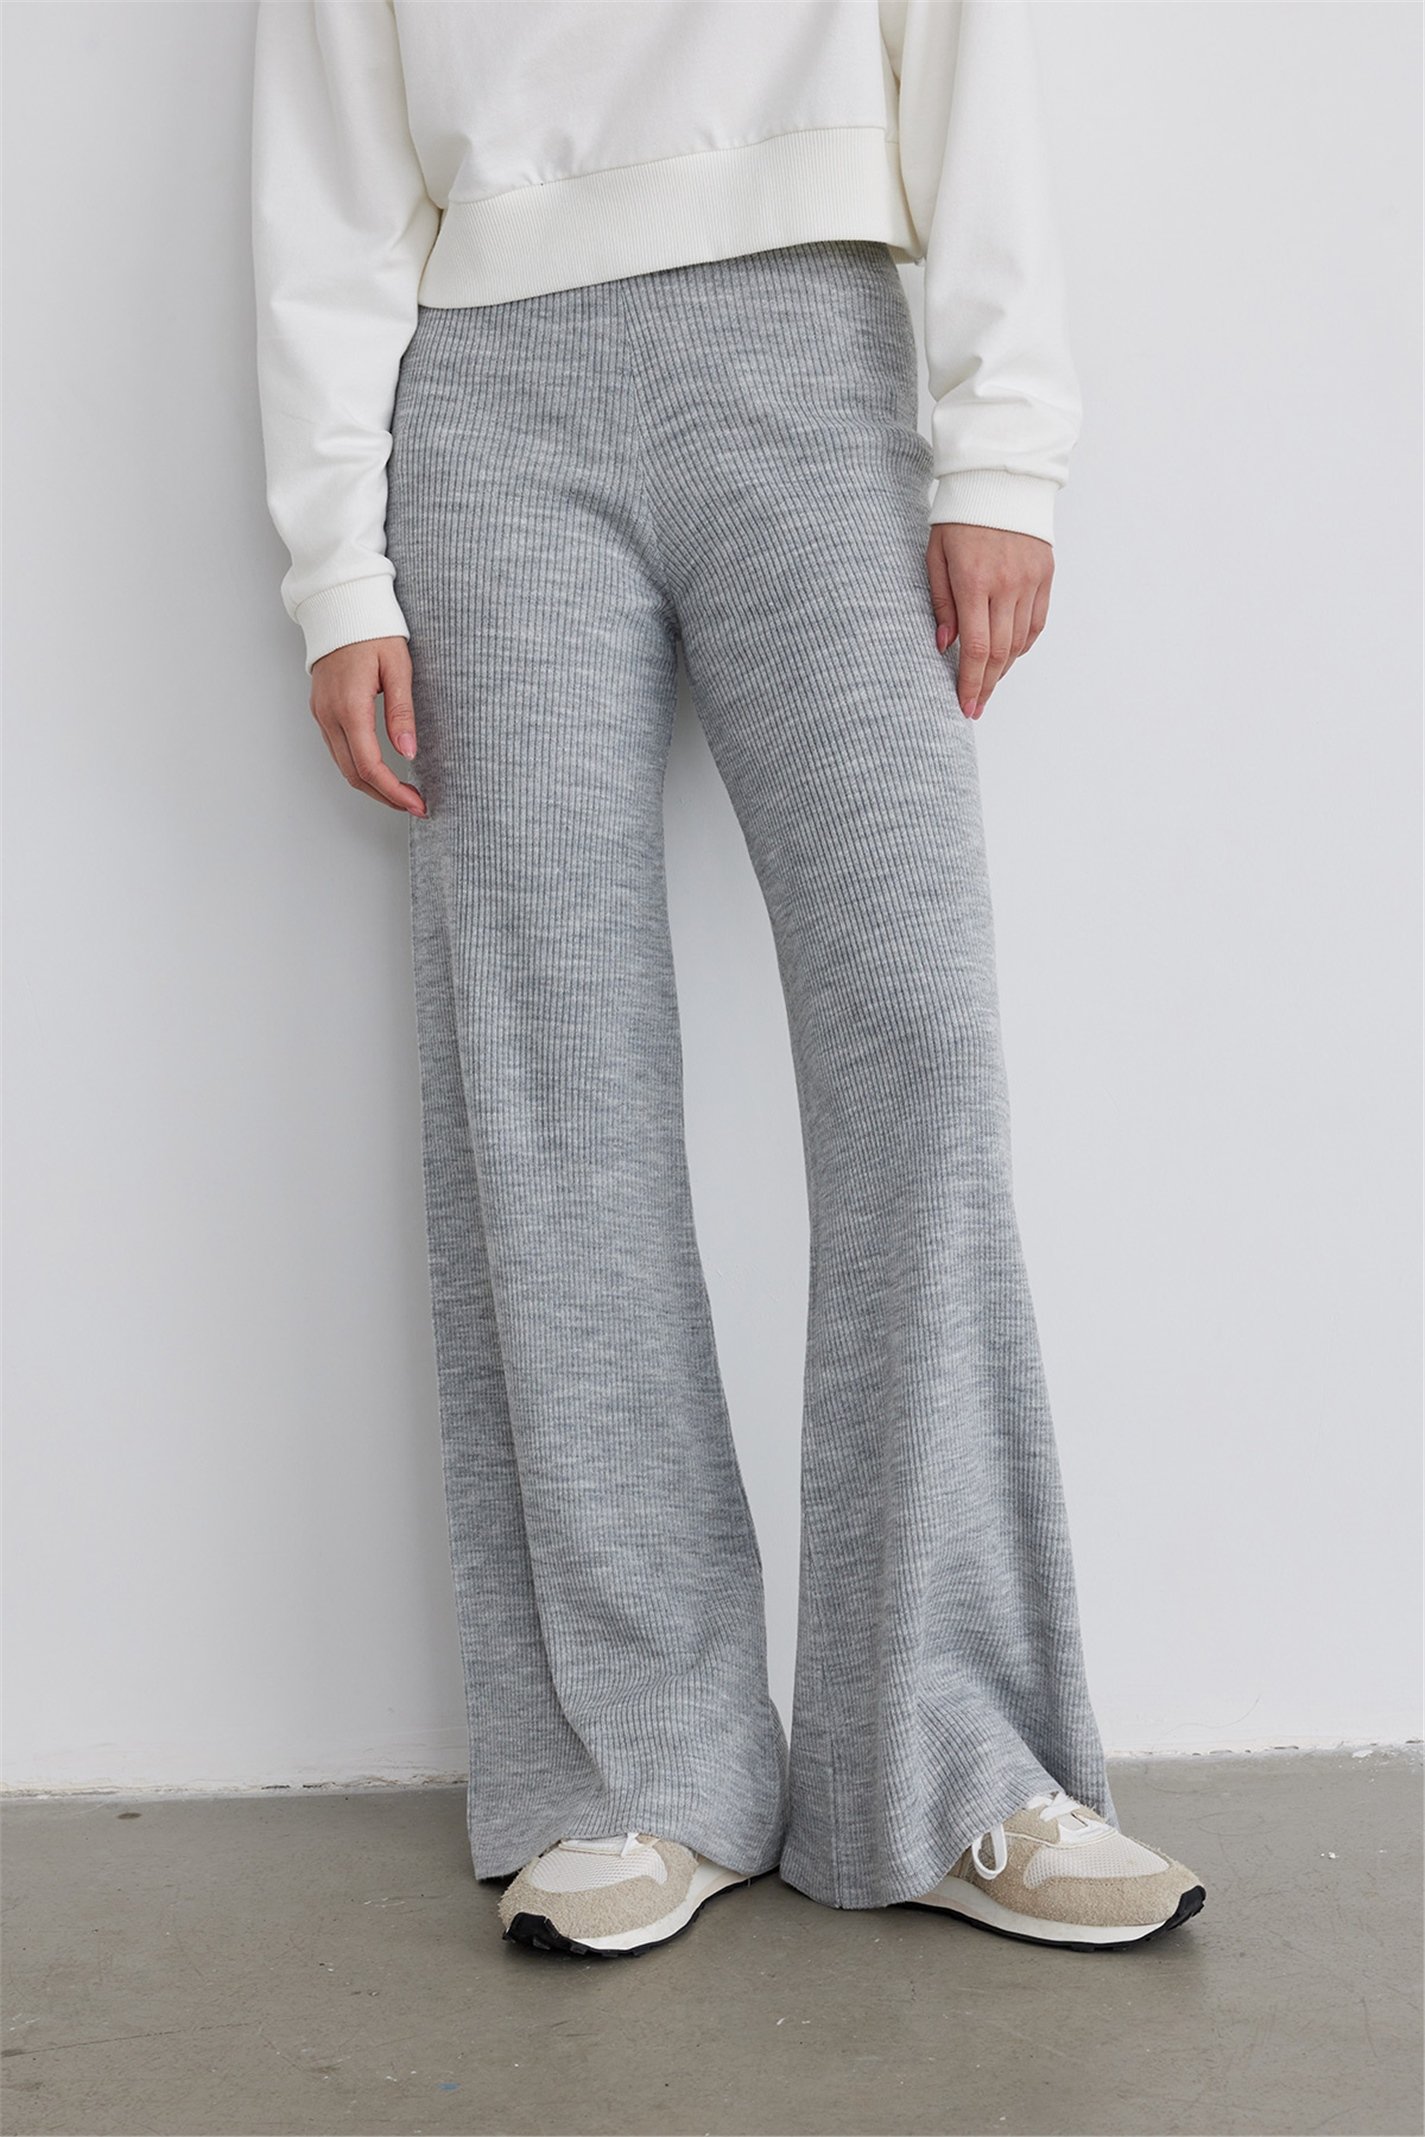 Designer Hand Knitted Wool Pants Soft Legwarmers Sweater Trousers Dark Grey  Joggers Leggings by EXTRAVAGANTZA 